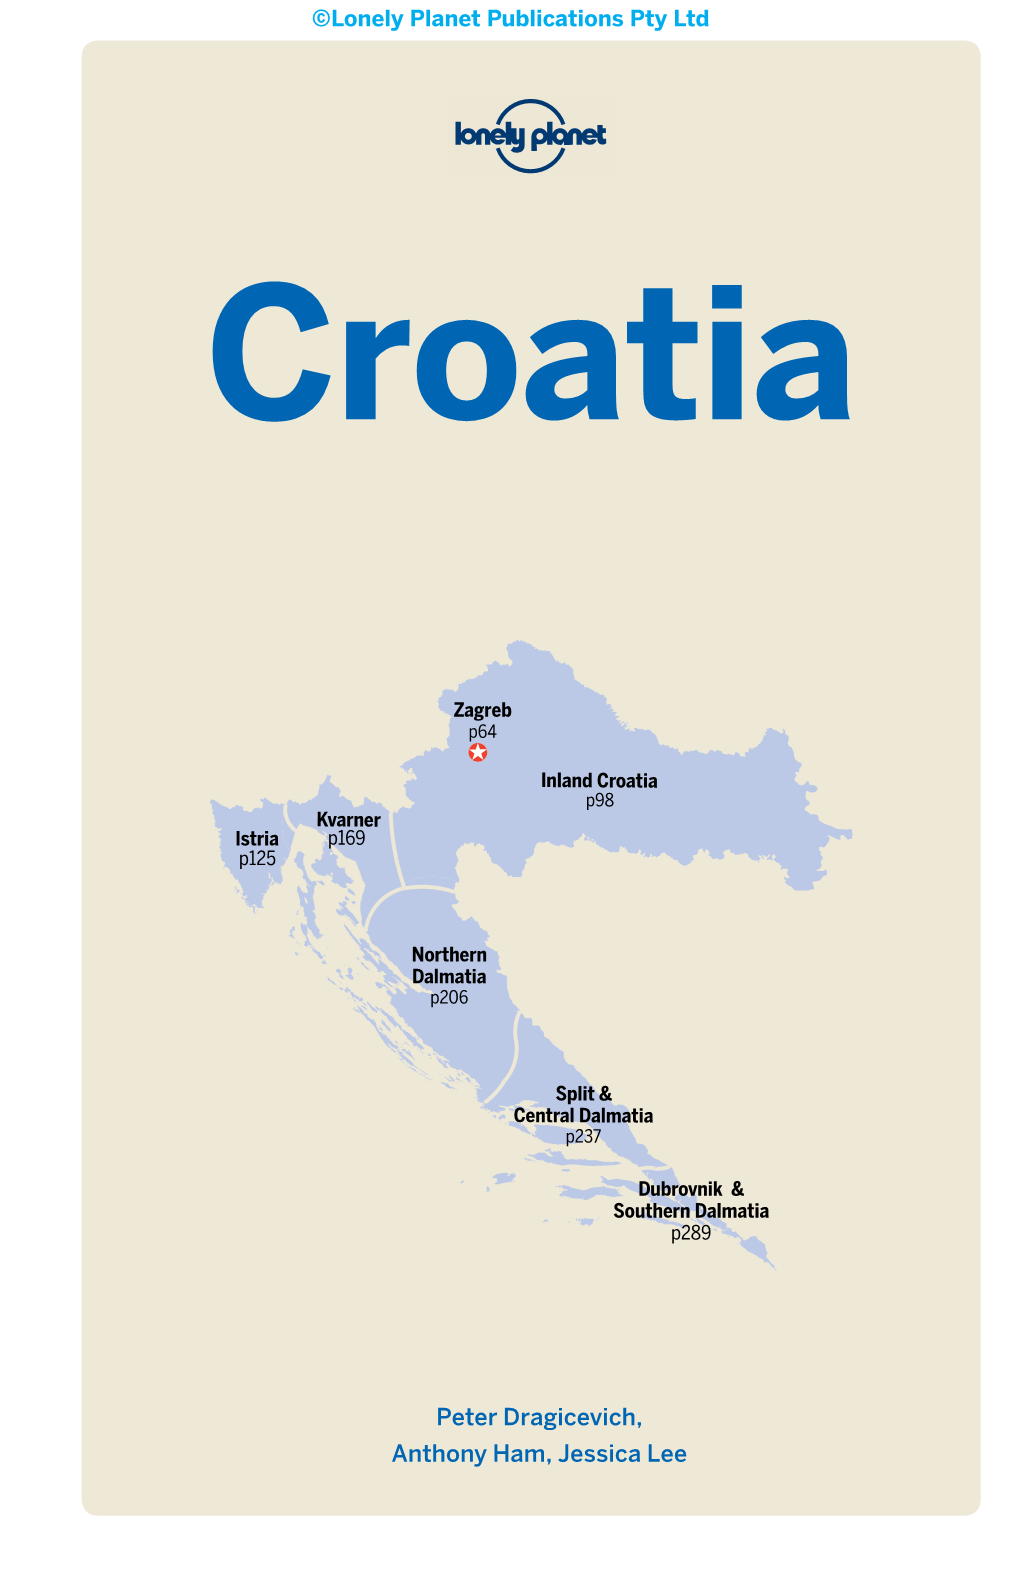 Croatia 102 P-Z Potomje 322 Drinking & Nightlife 251-4 Tučepi 268 Istria 143, 150